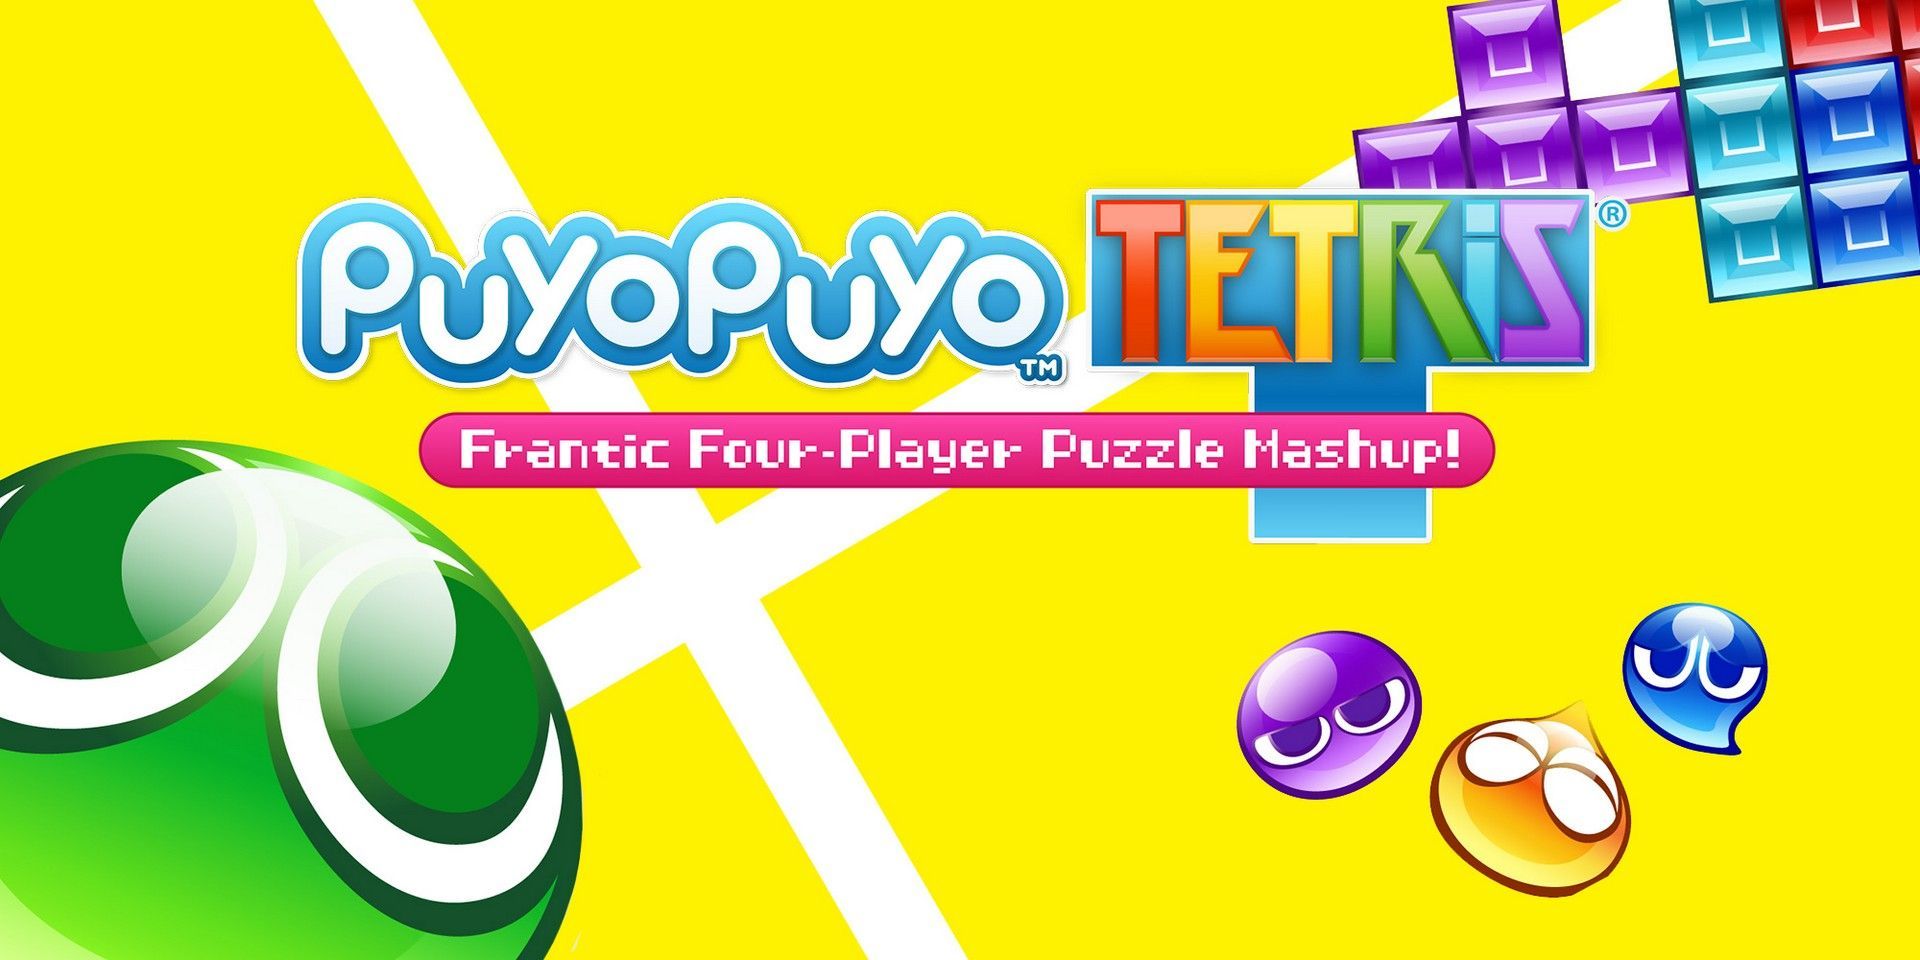 Puyo Puyo Tetris wallpaper HD. Puyo, Tetris, Tech logos